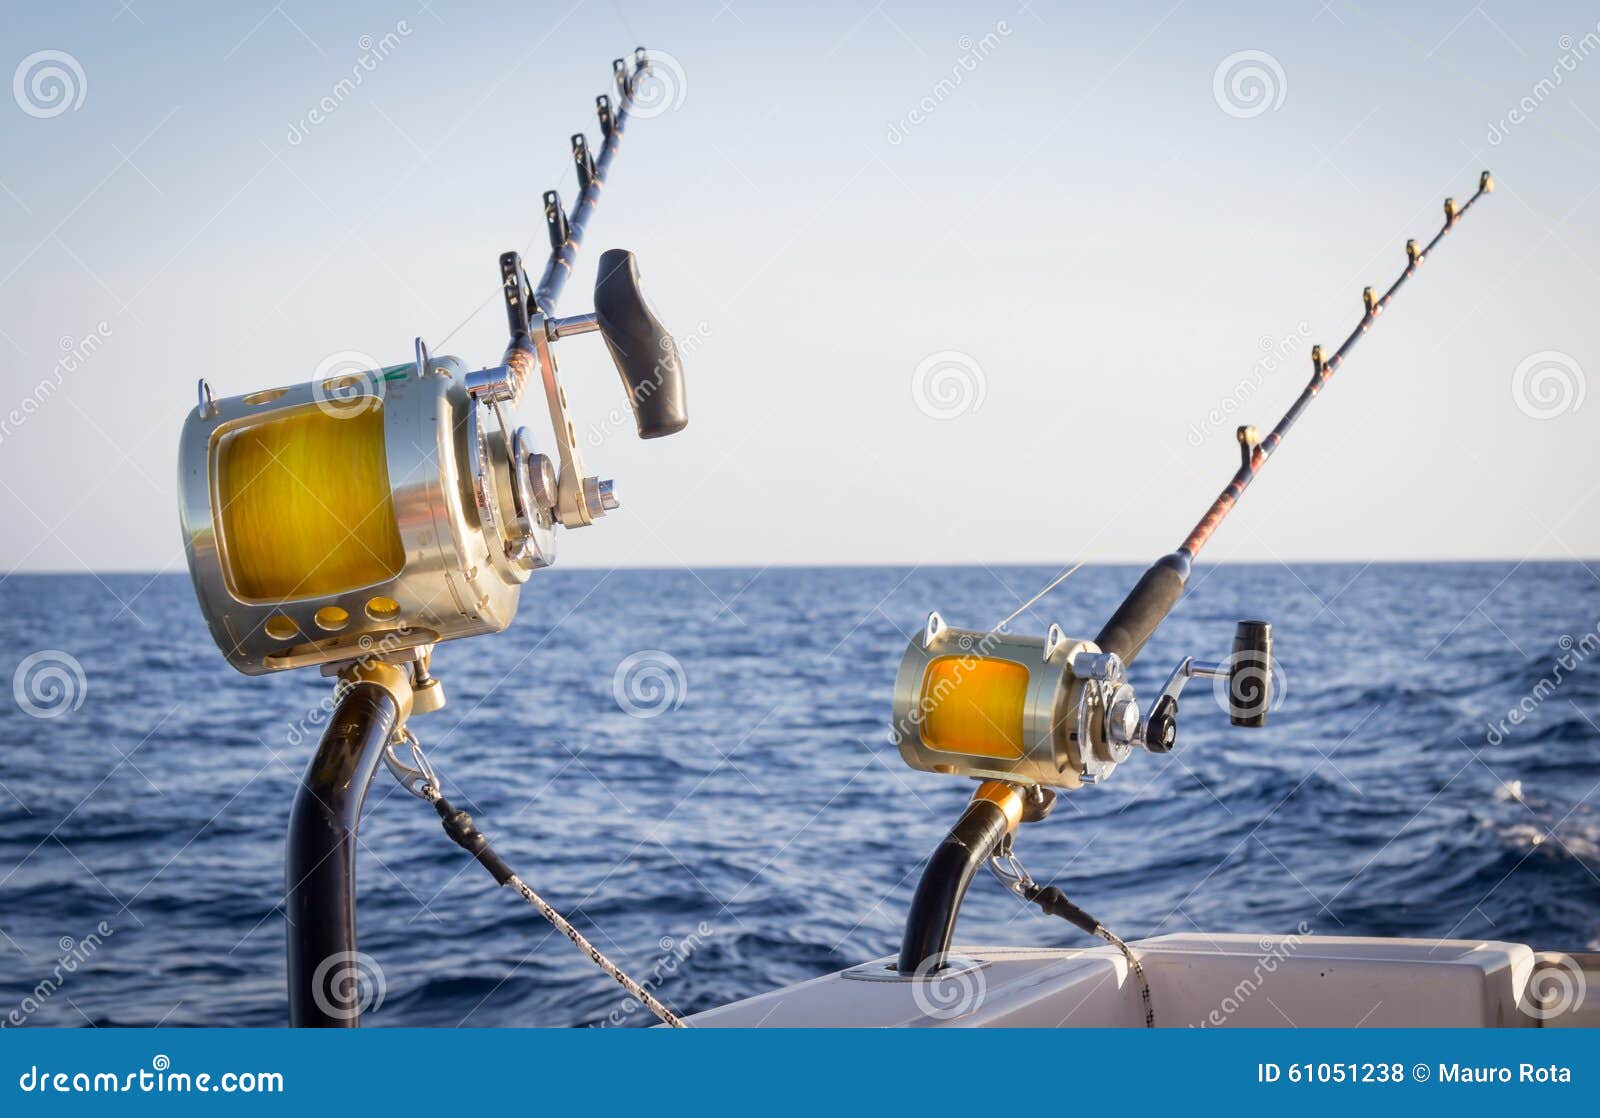 Marlin fishing stock photo. Image of ocean, marlin, ship - 61051238